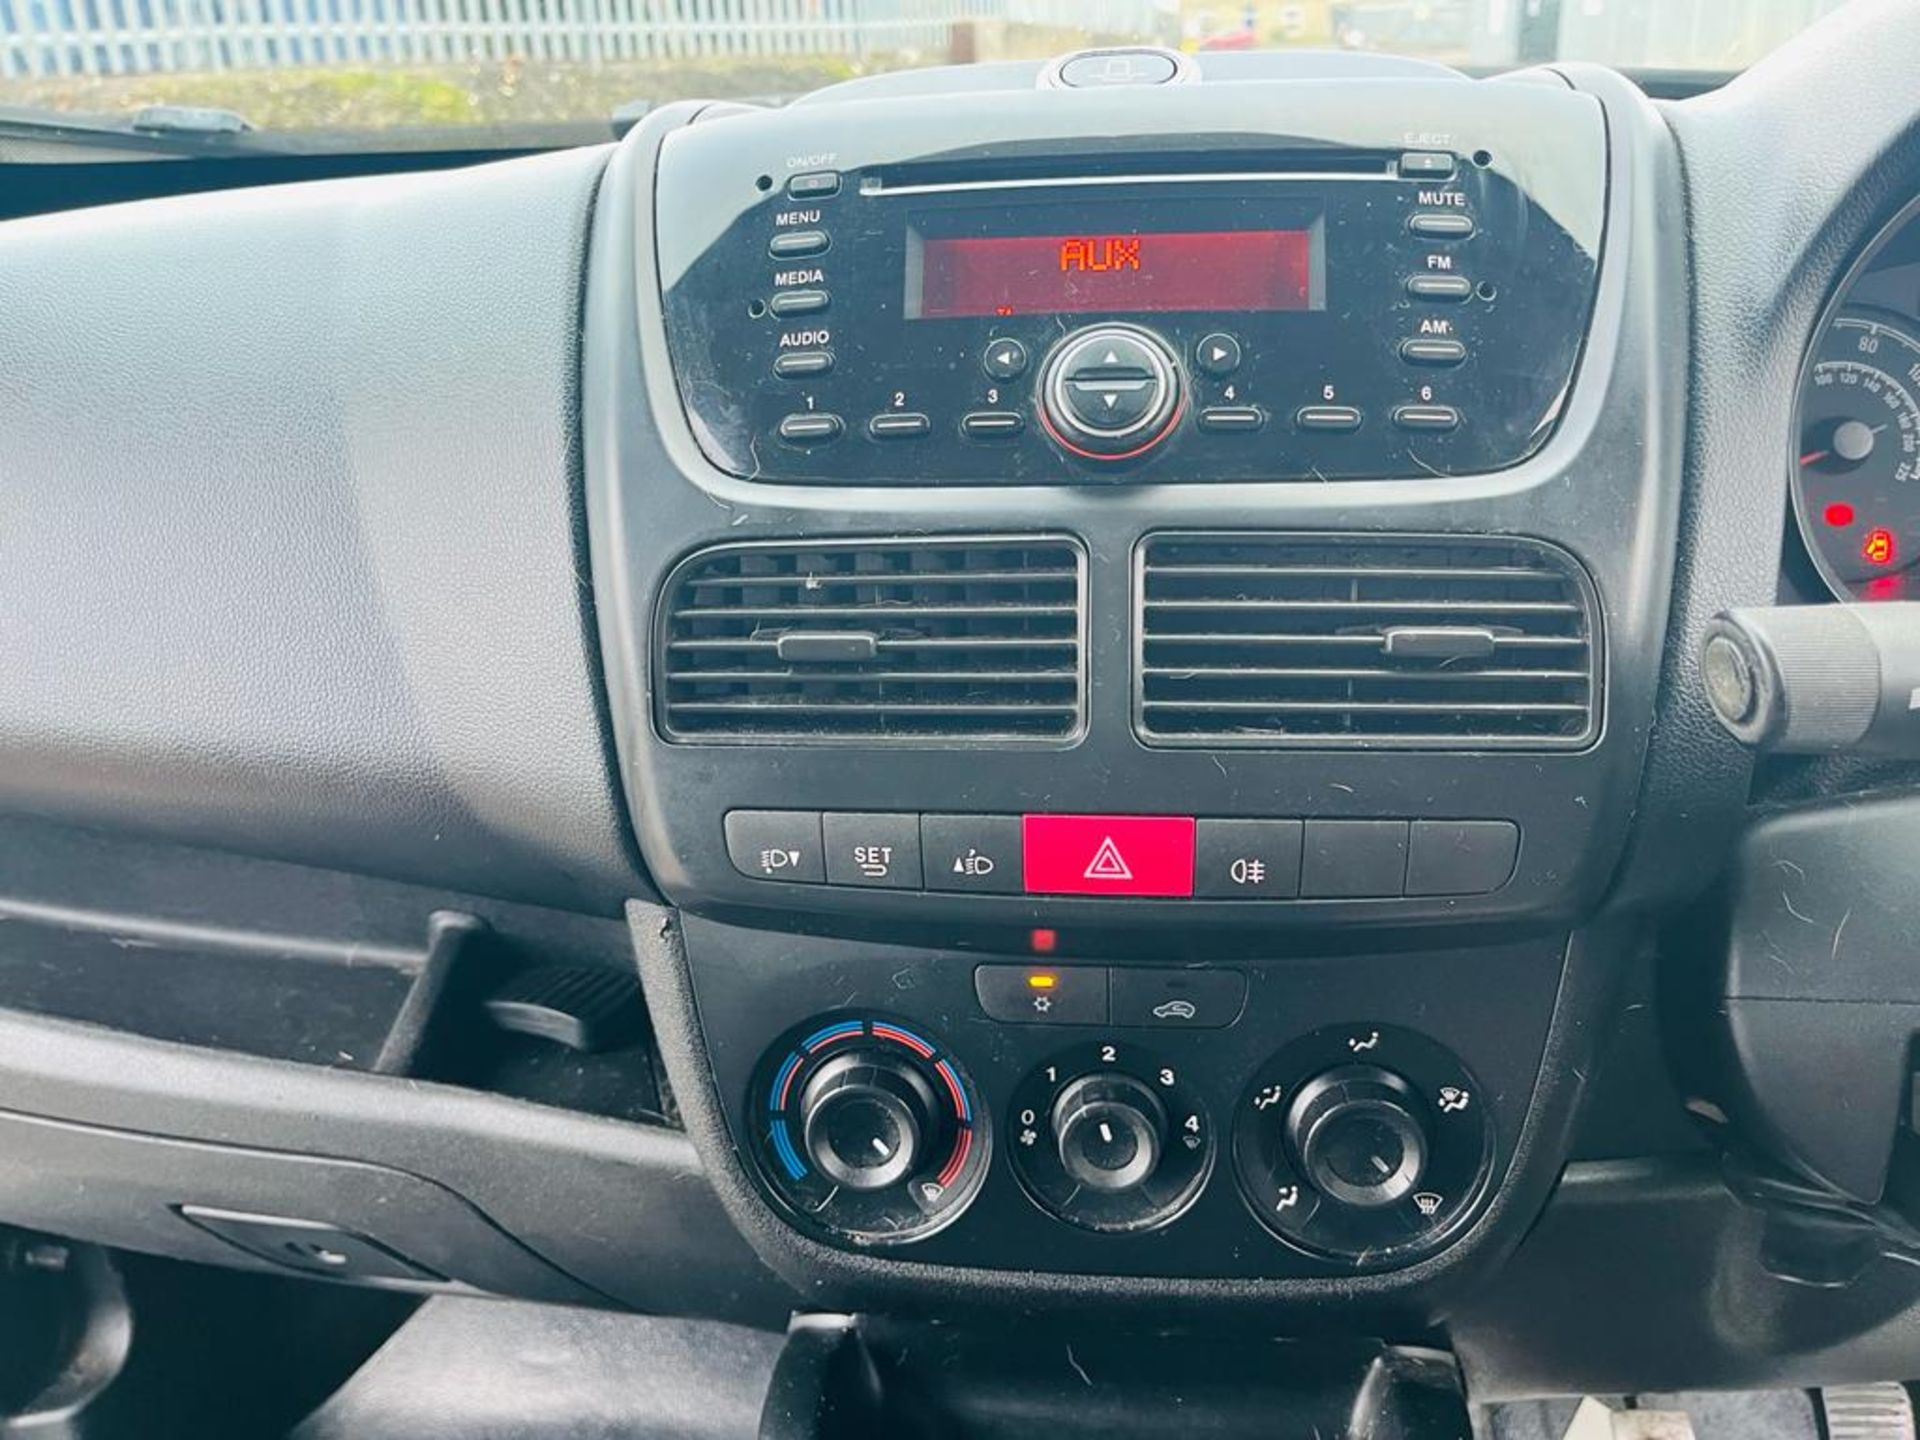 ** ON SALE ** Vauxhall Combo 1.6 CDTI 105 2300 Sportive LWB 2015 '15 Reg' - Panel Van - No vat - Image 23 of 31